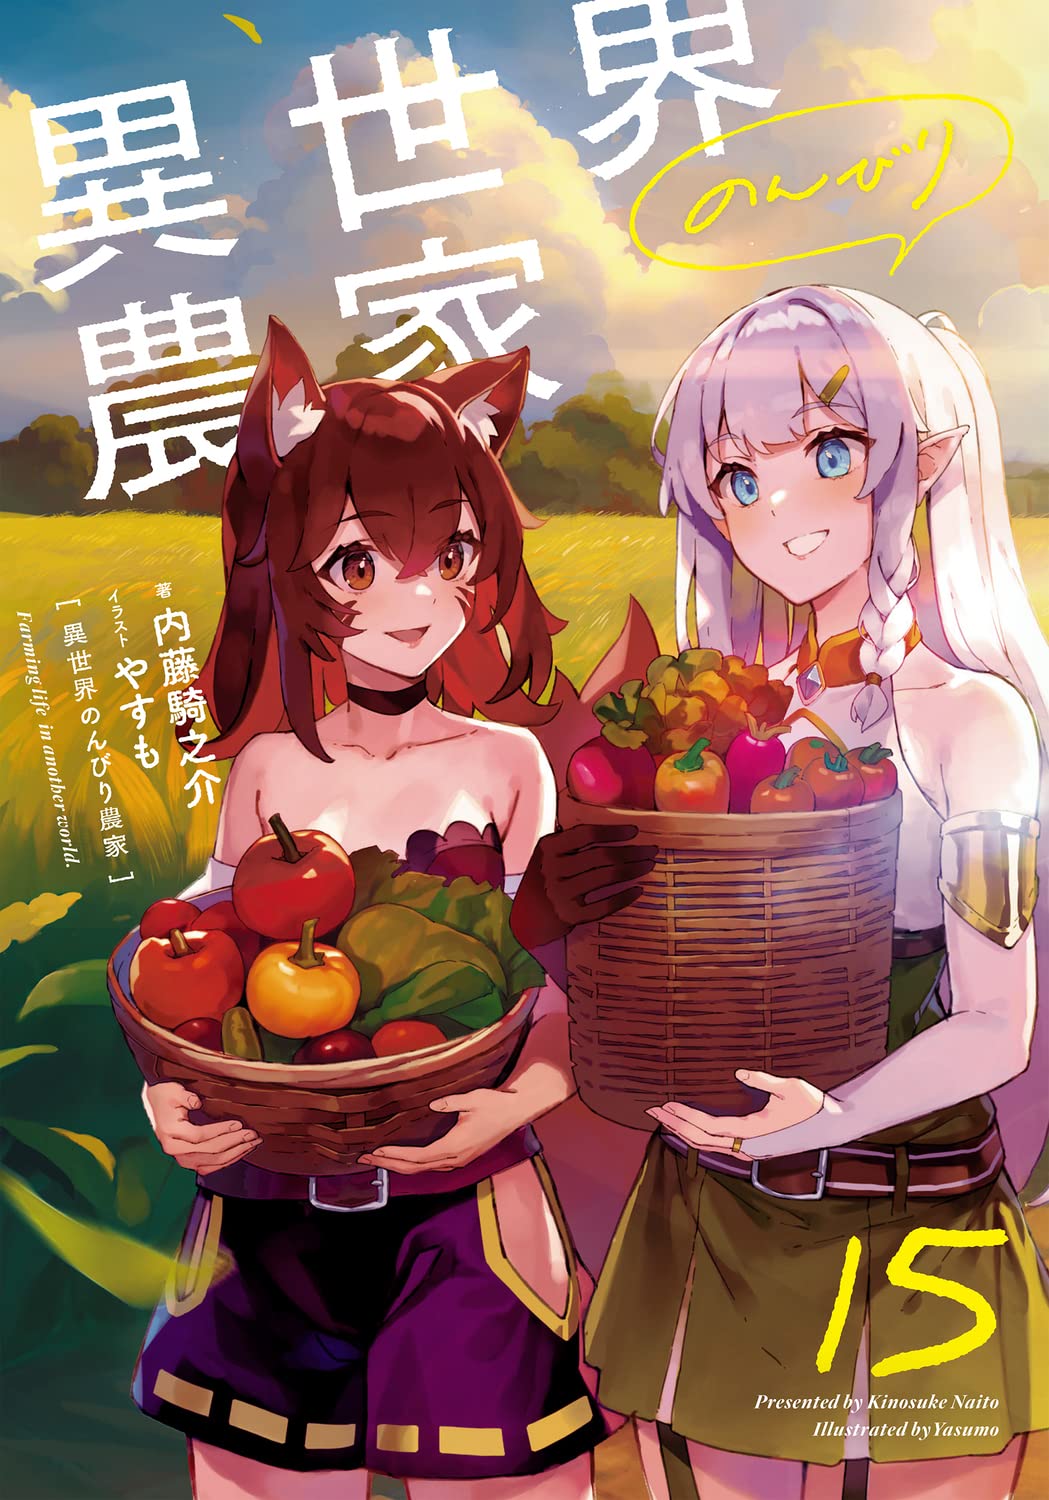 Isekai Nonbiri Nouka - Farming Life in Another World - Animes Online